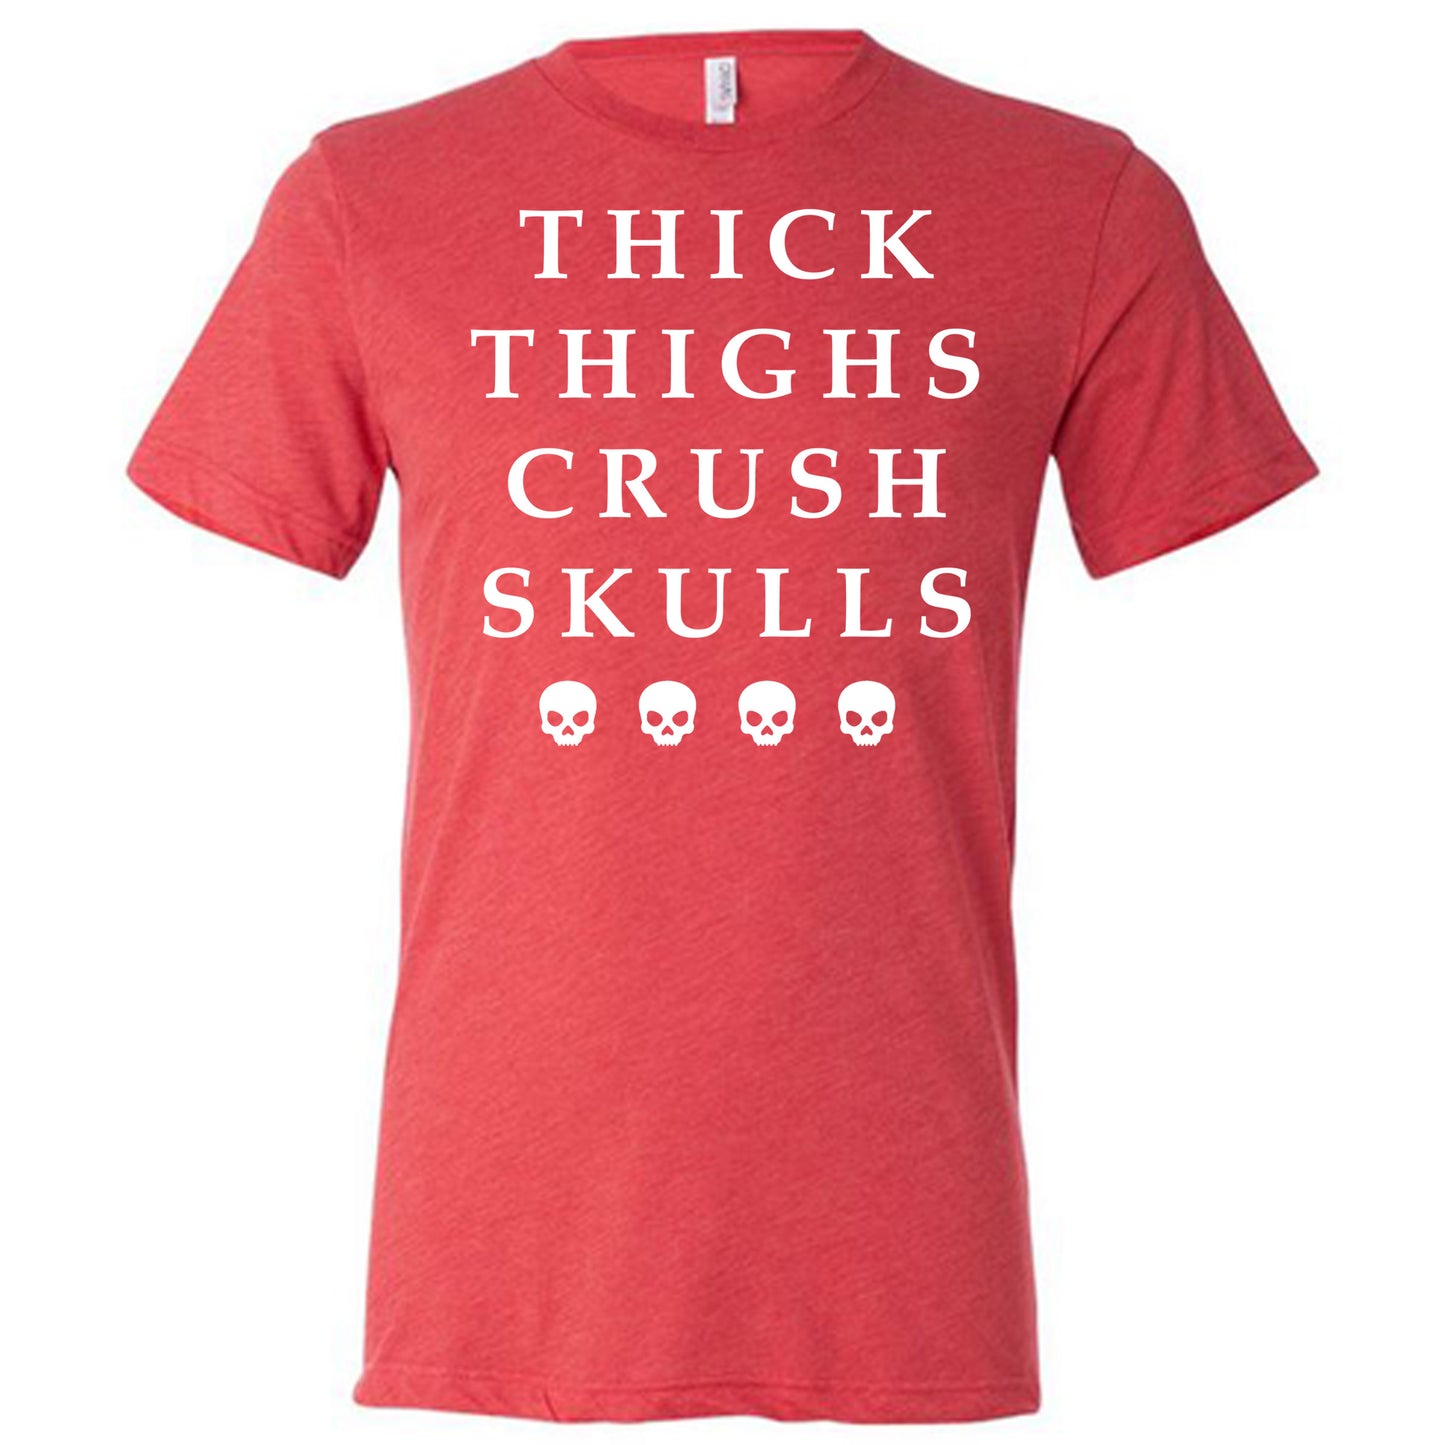 red Thick Thighs Crush Skulls shirt